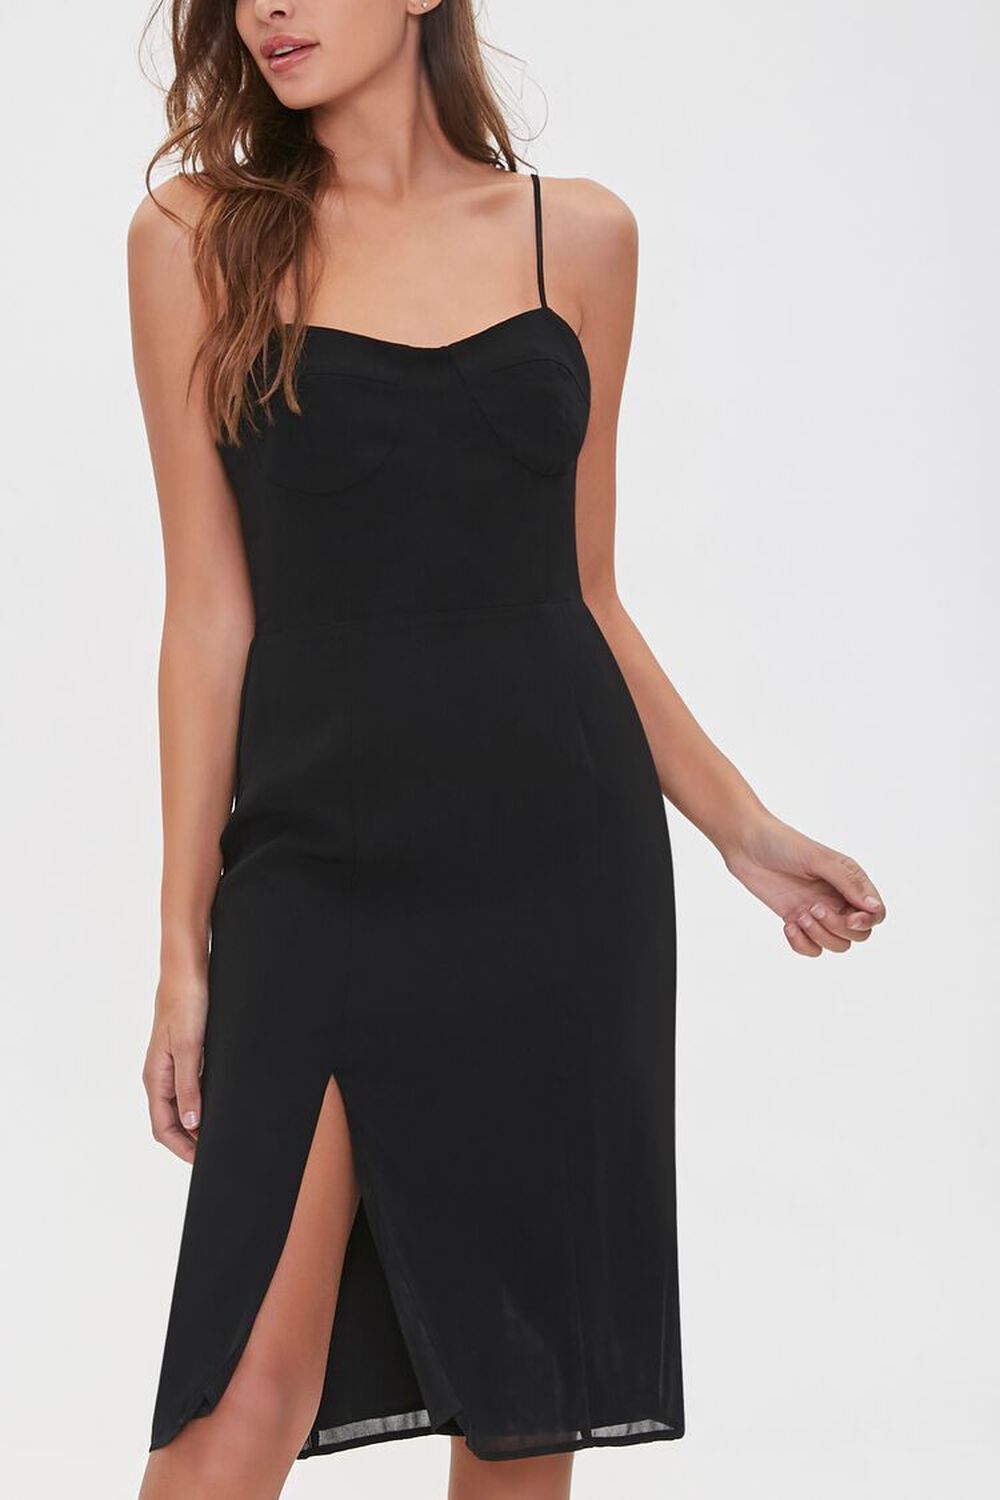 BLACK Chiffon Mini Cami Dress, image 1